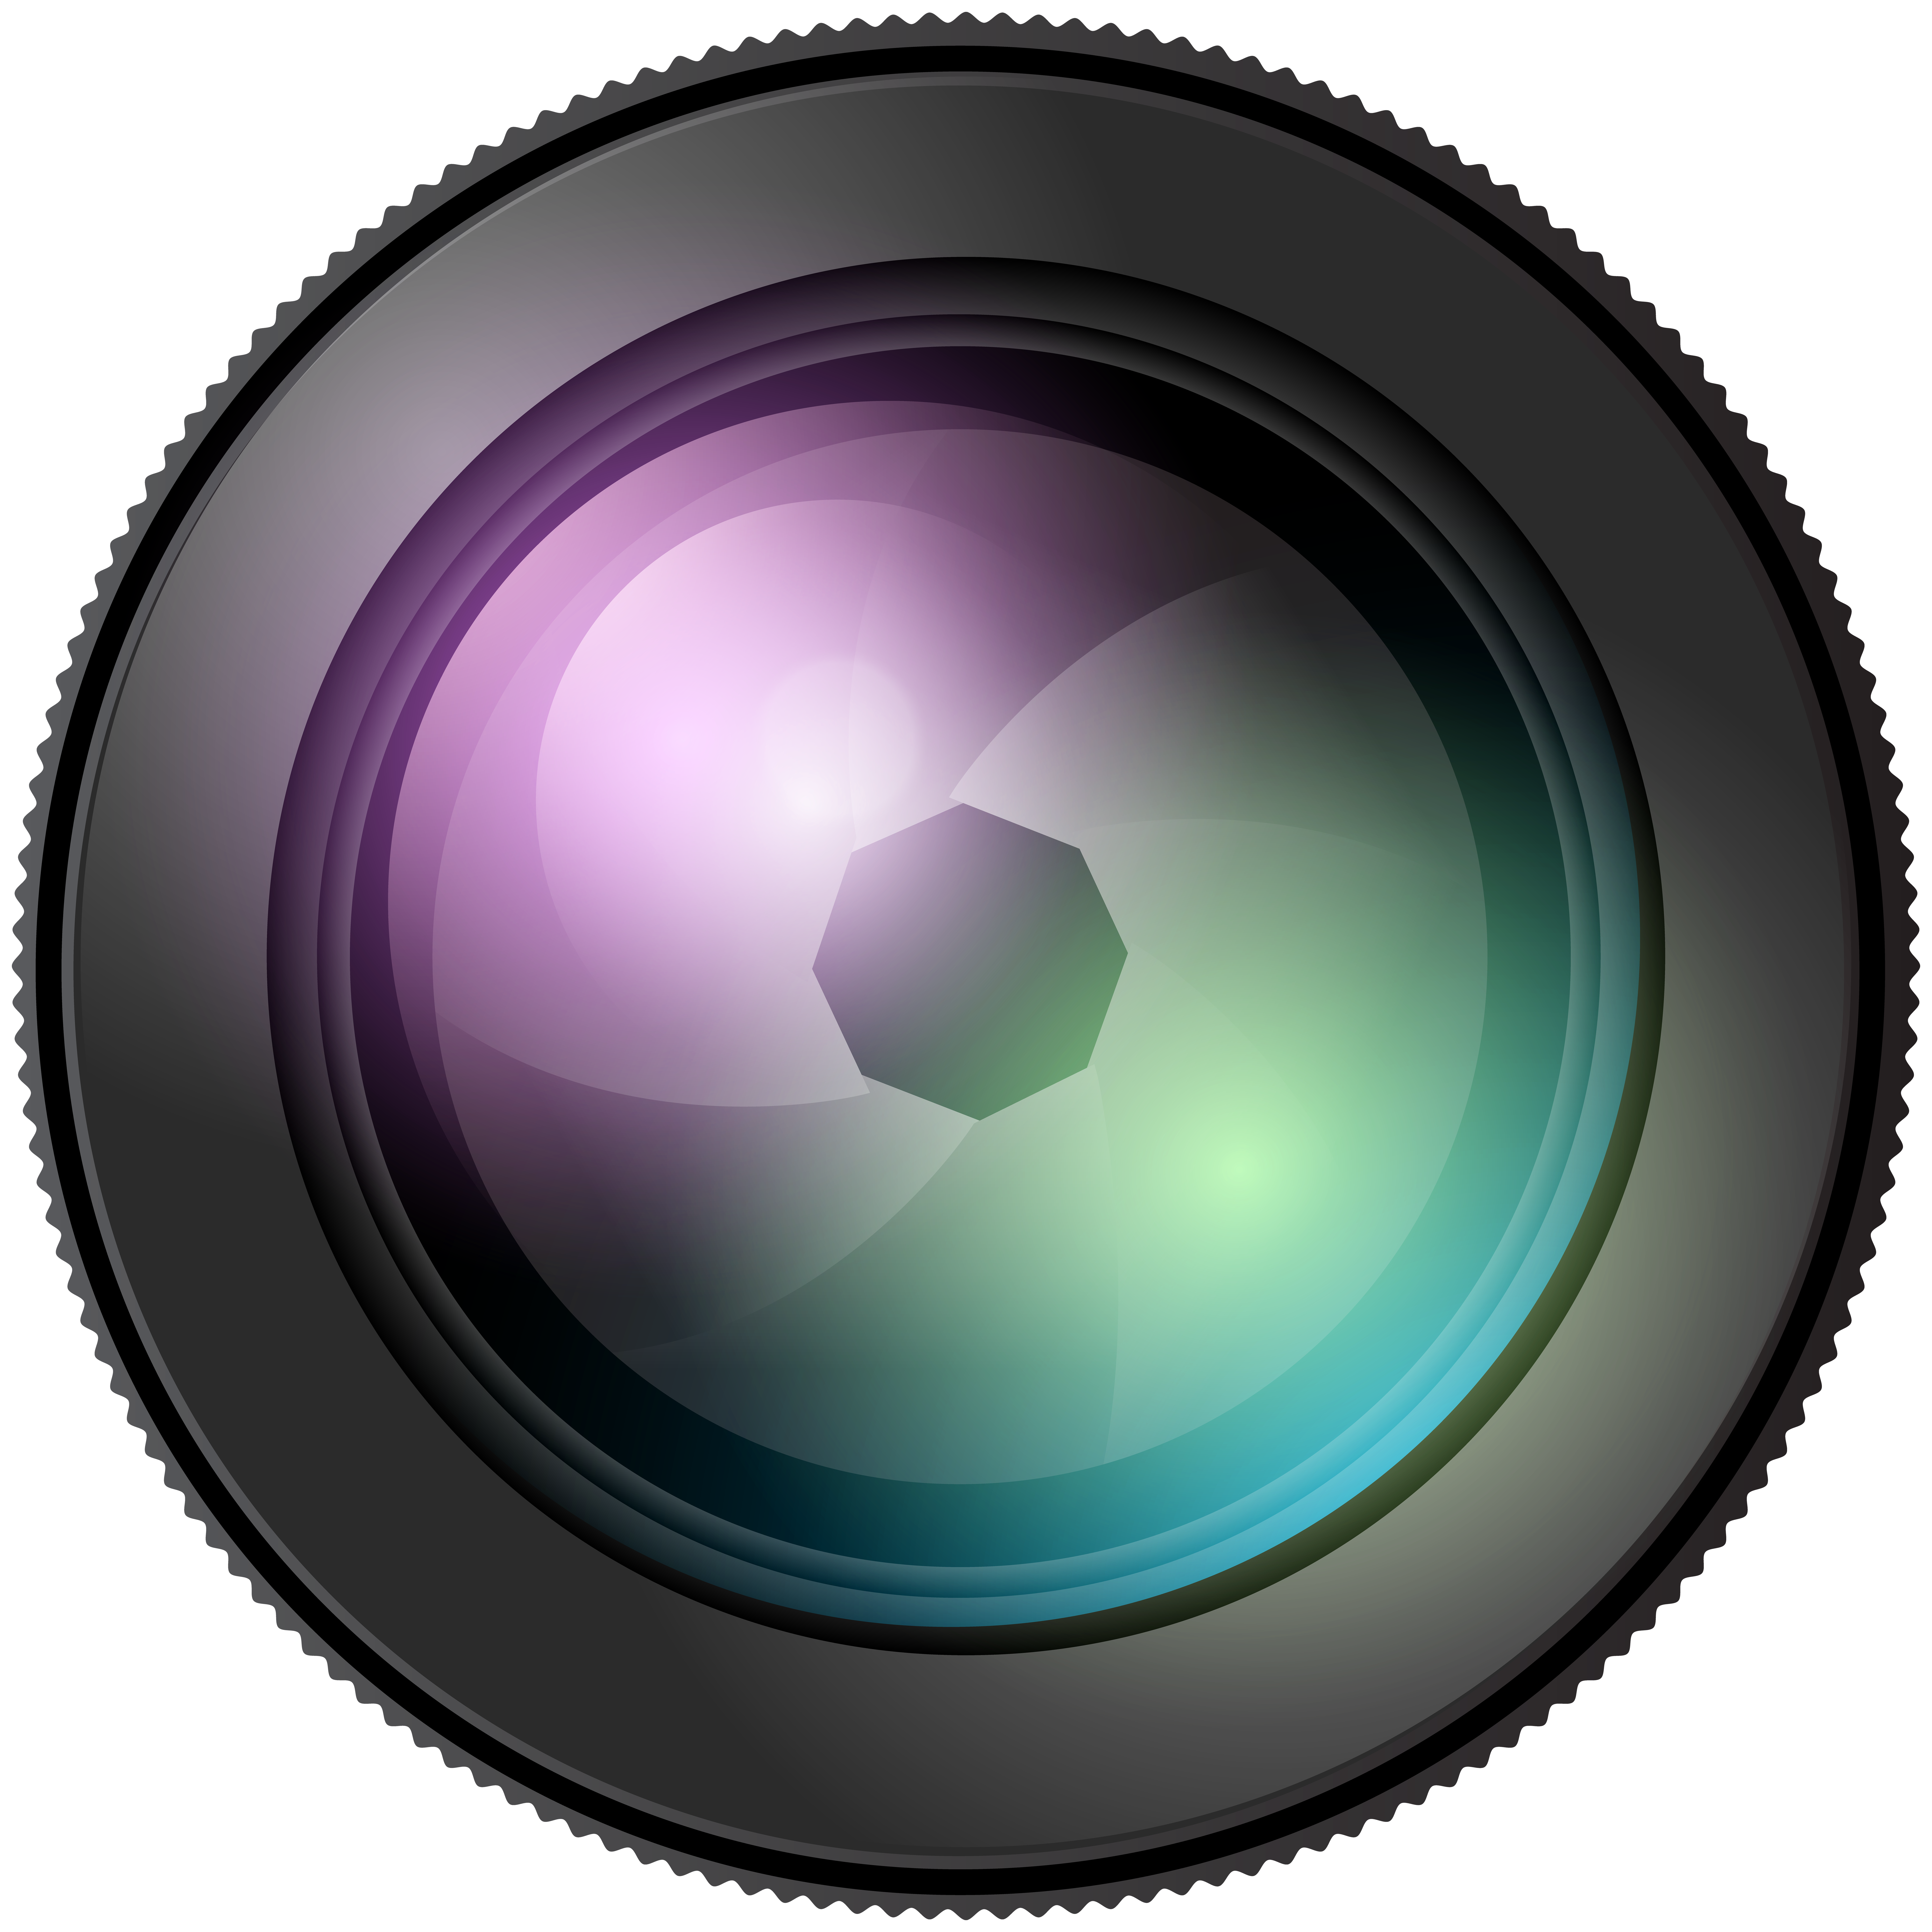 Photograph clipart travel camera. Lens png transparent clip